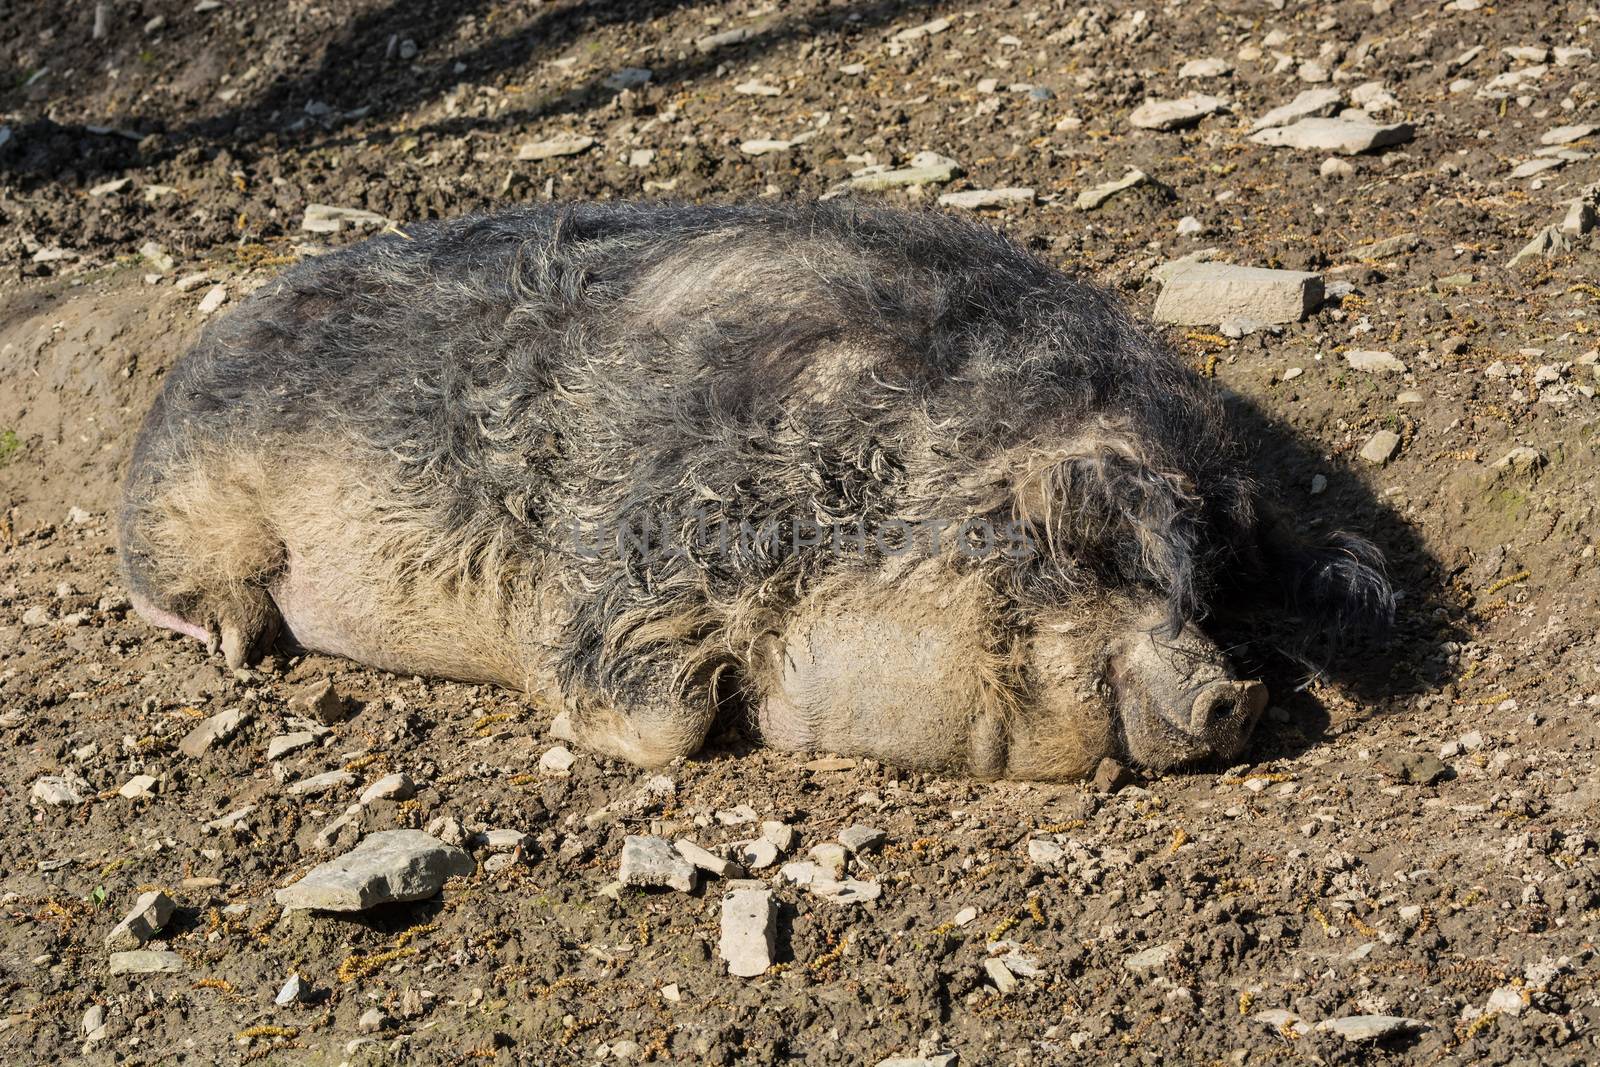 European wild boar in the mud by JFsPic